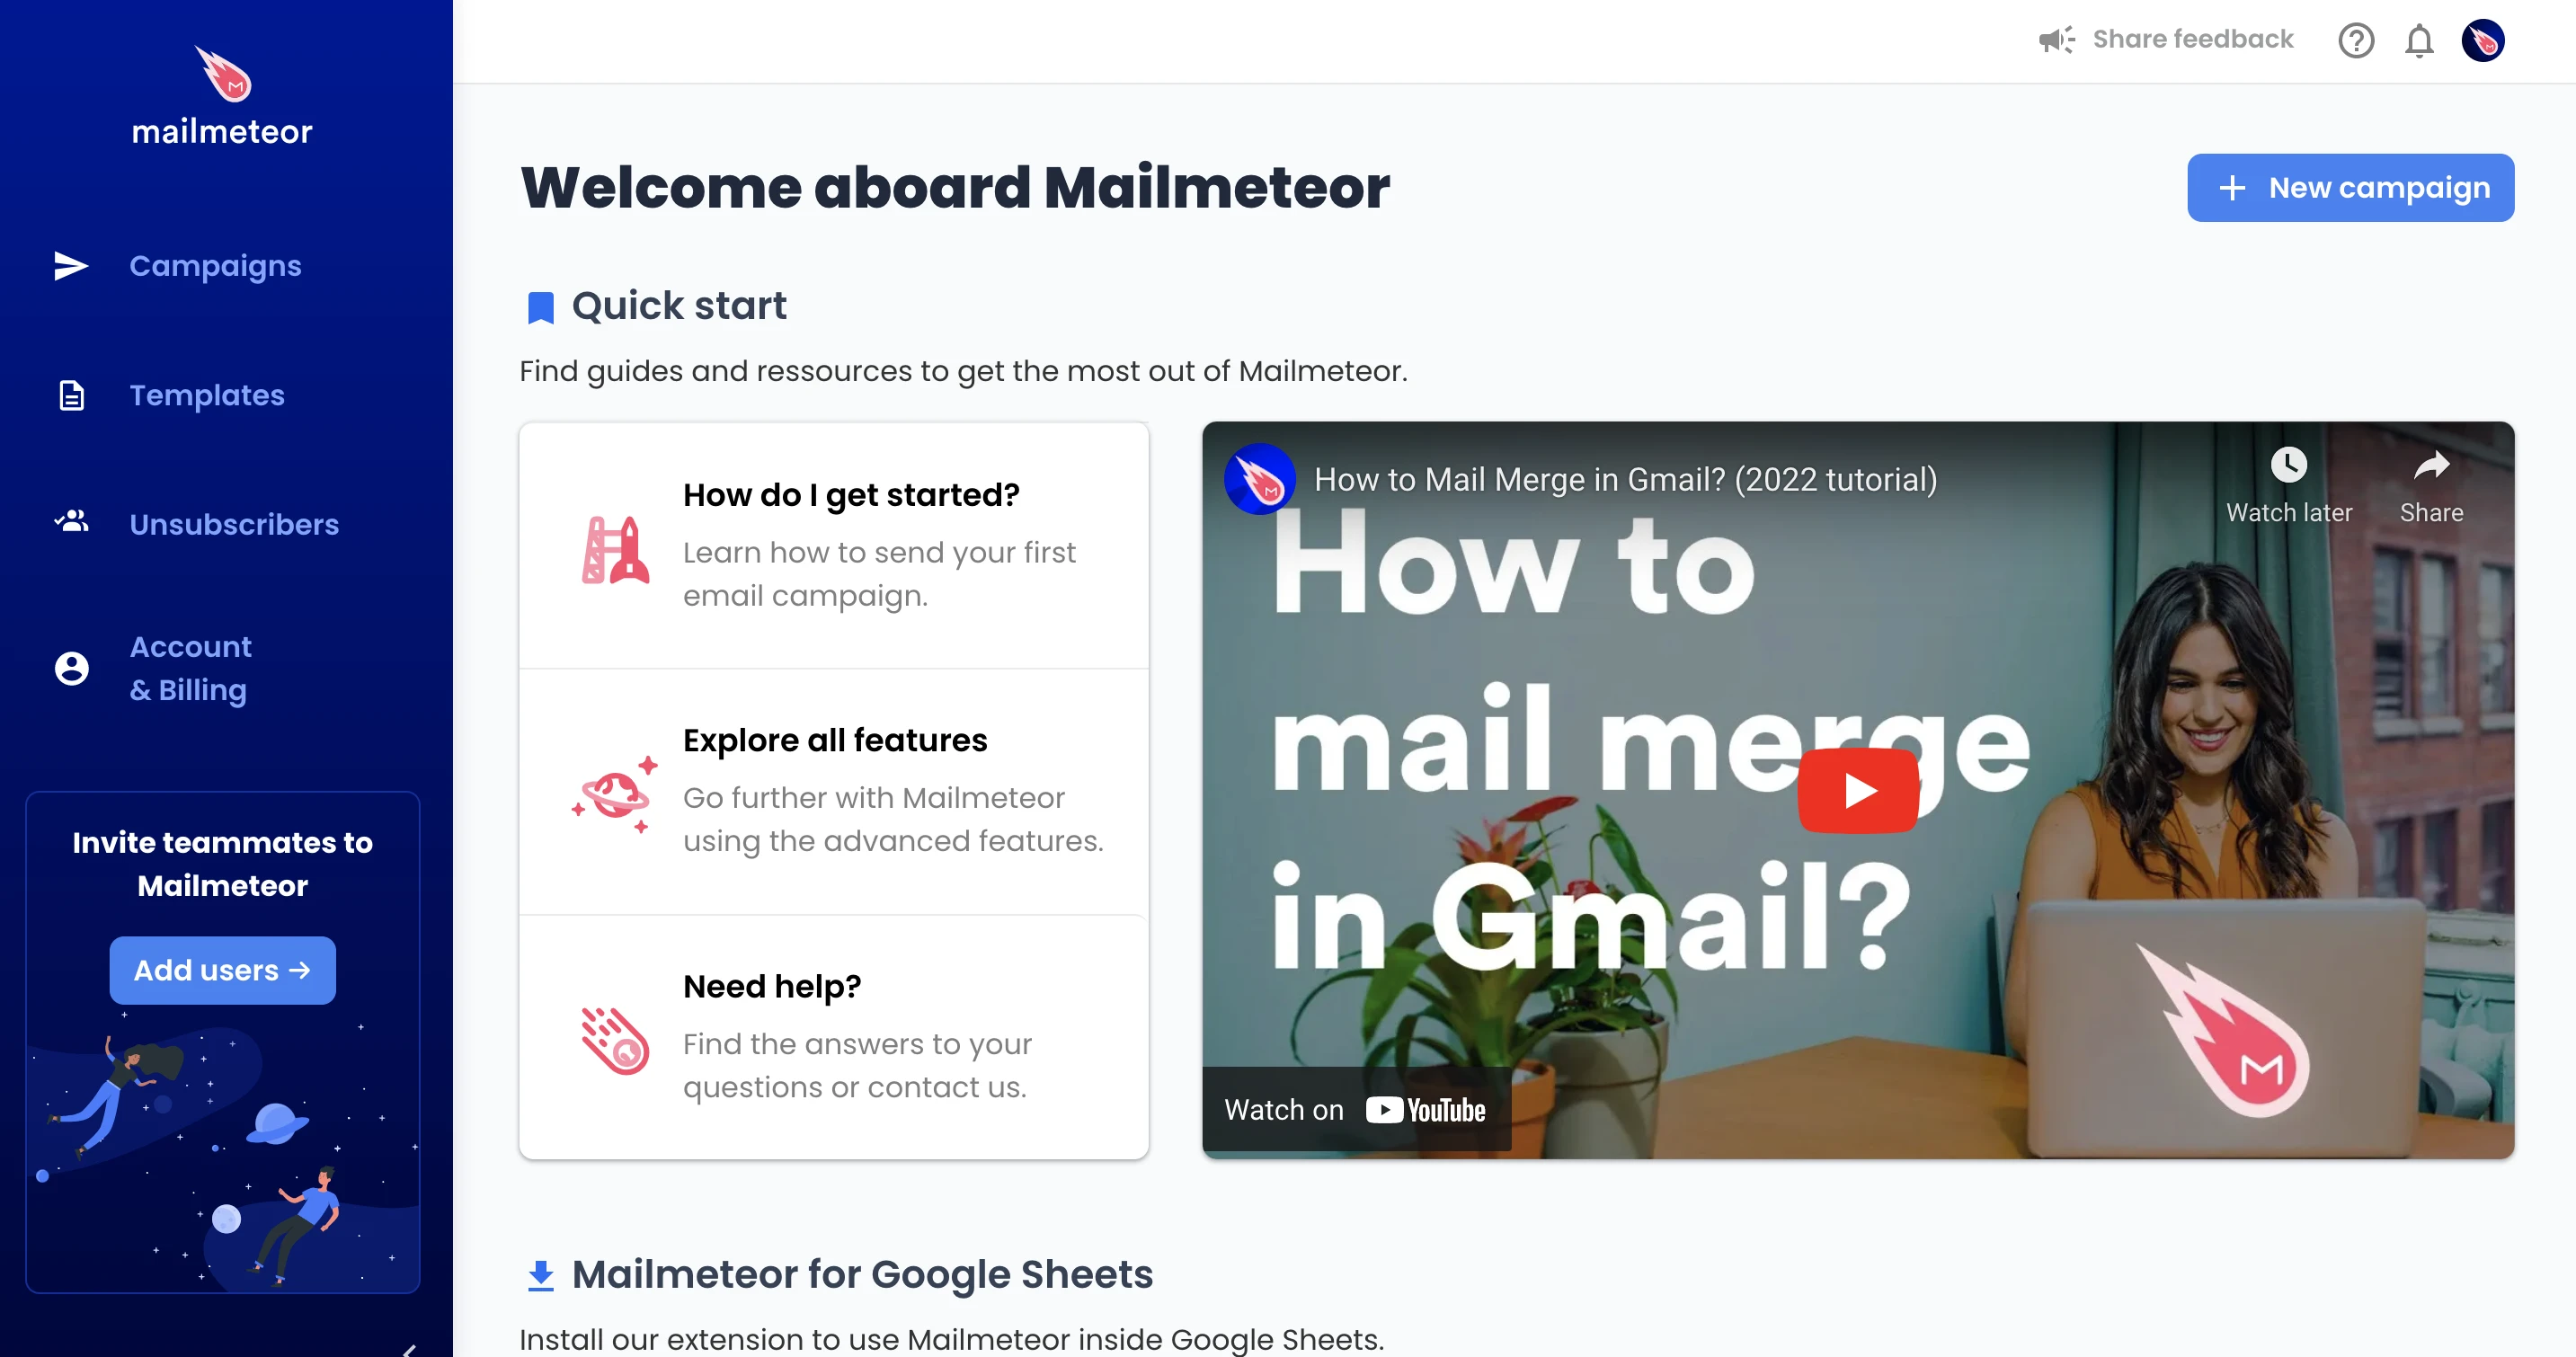 Mailmeteor's homepage